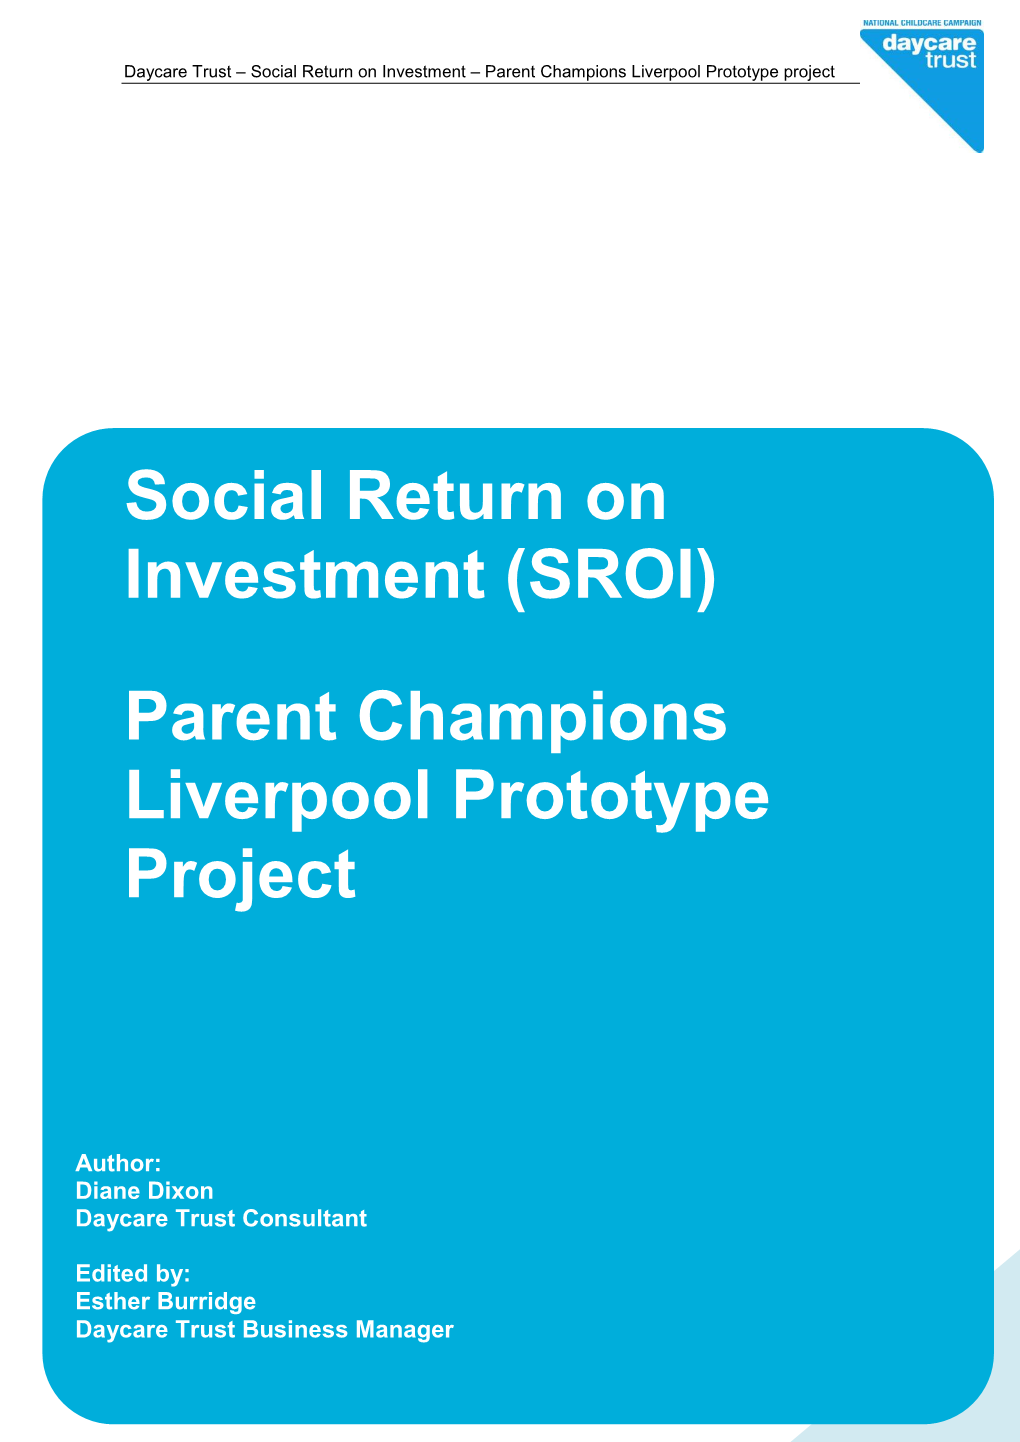 (SROI) Parent Champions Liverpool Prototype Project